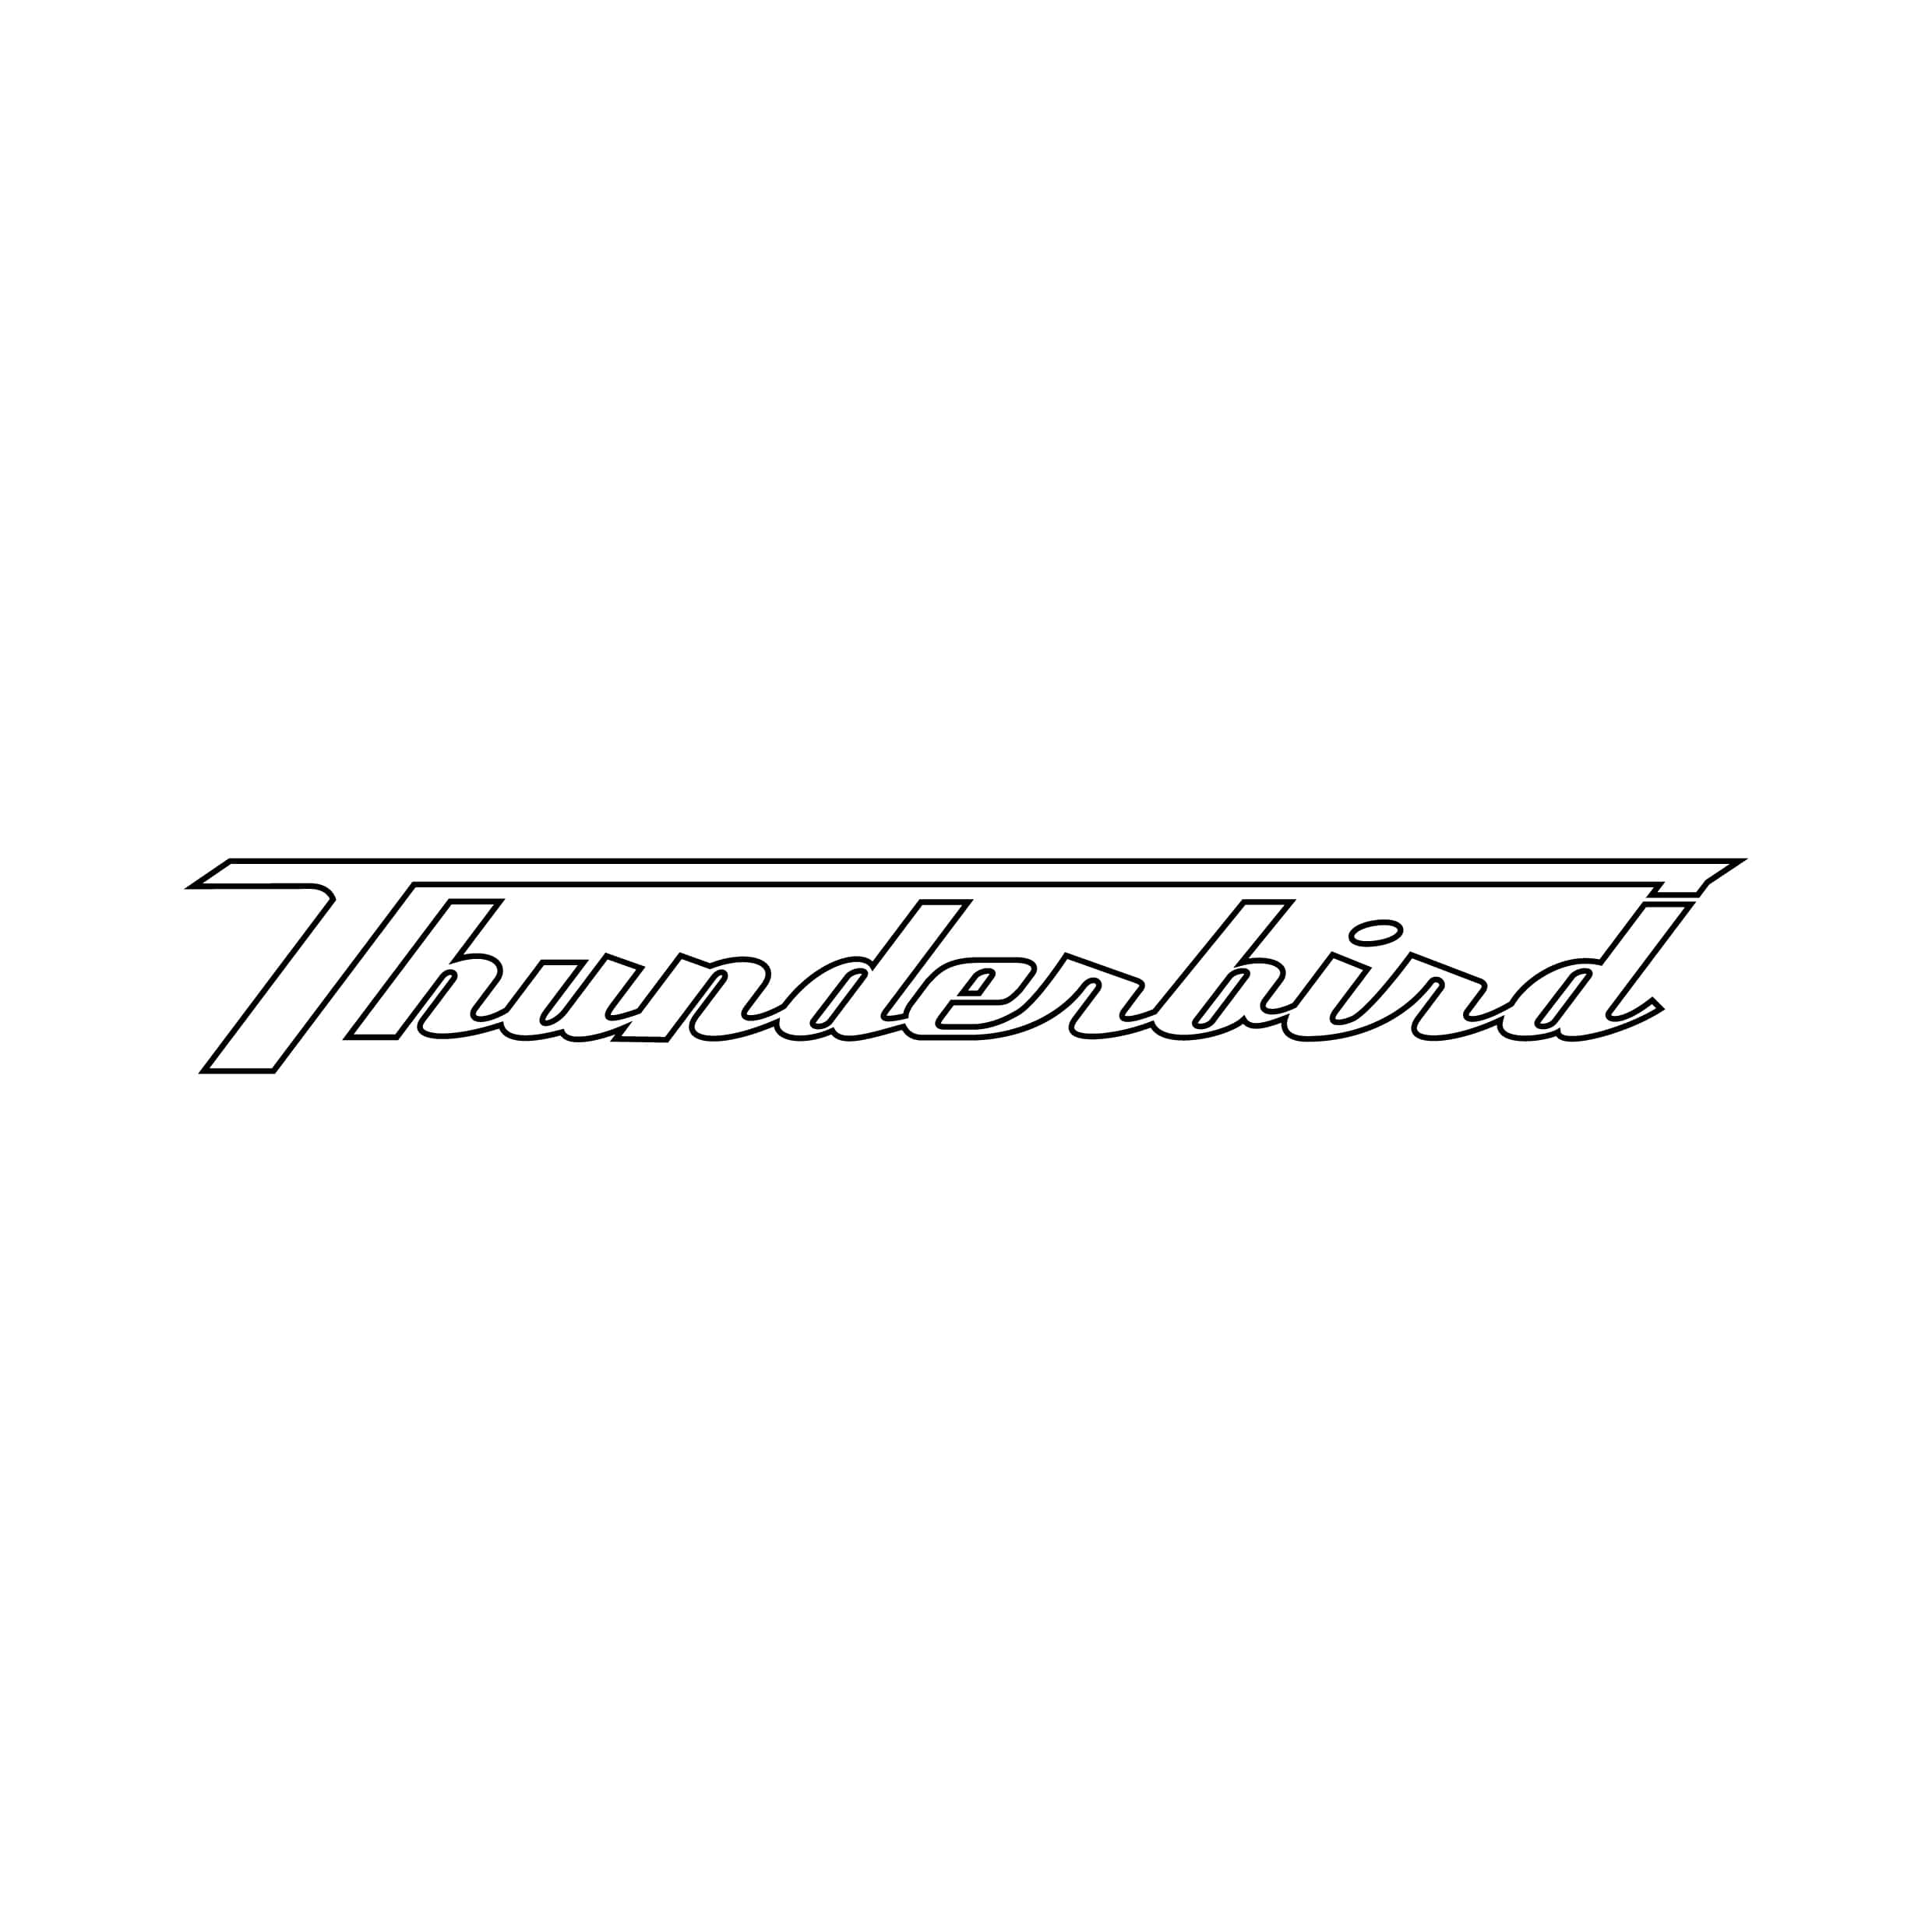 stickers-Thunderbird-triumph-ref14-autocollant-moto-sticker-deux-roue-autocollants-decals-sponsors-tuning-sport-logo-bike-scooter-min